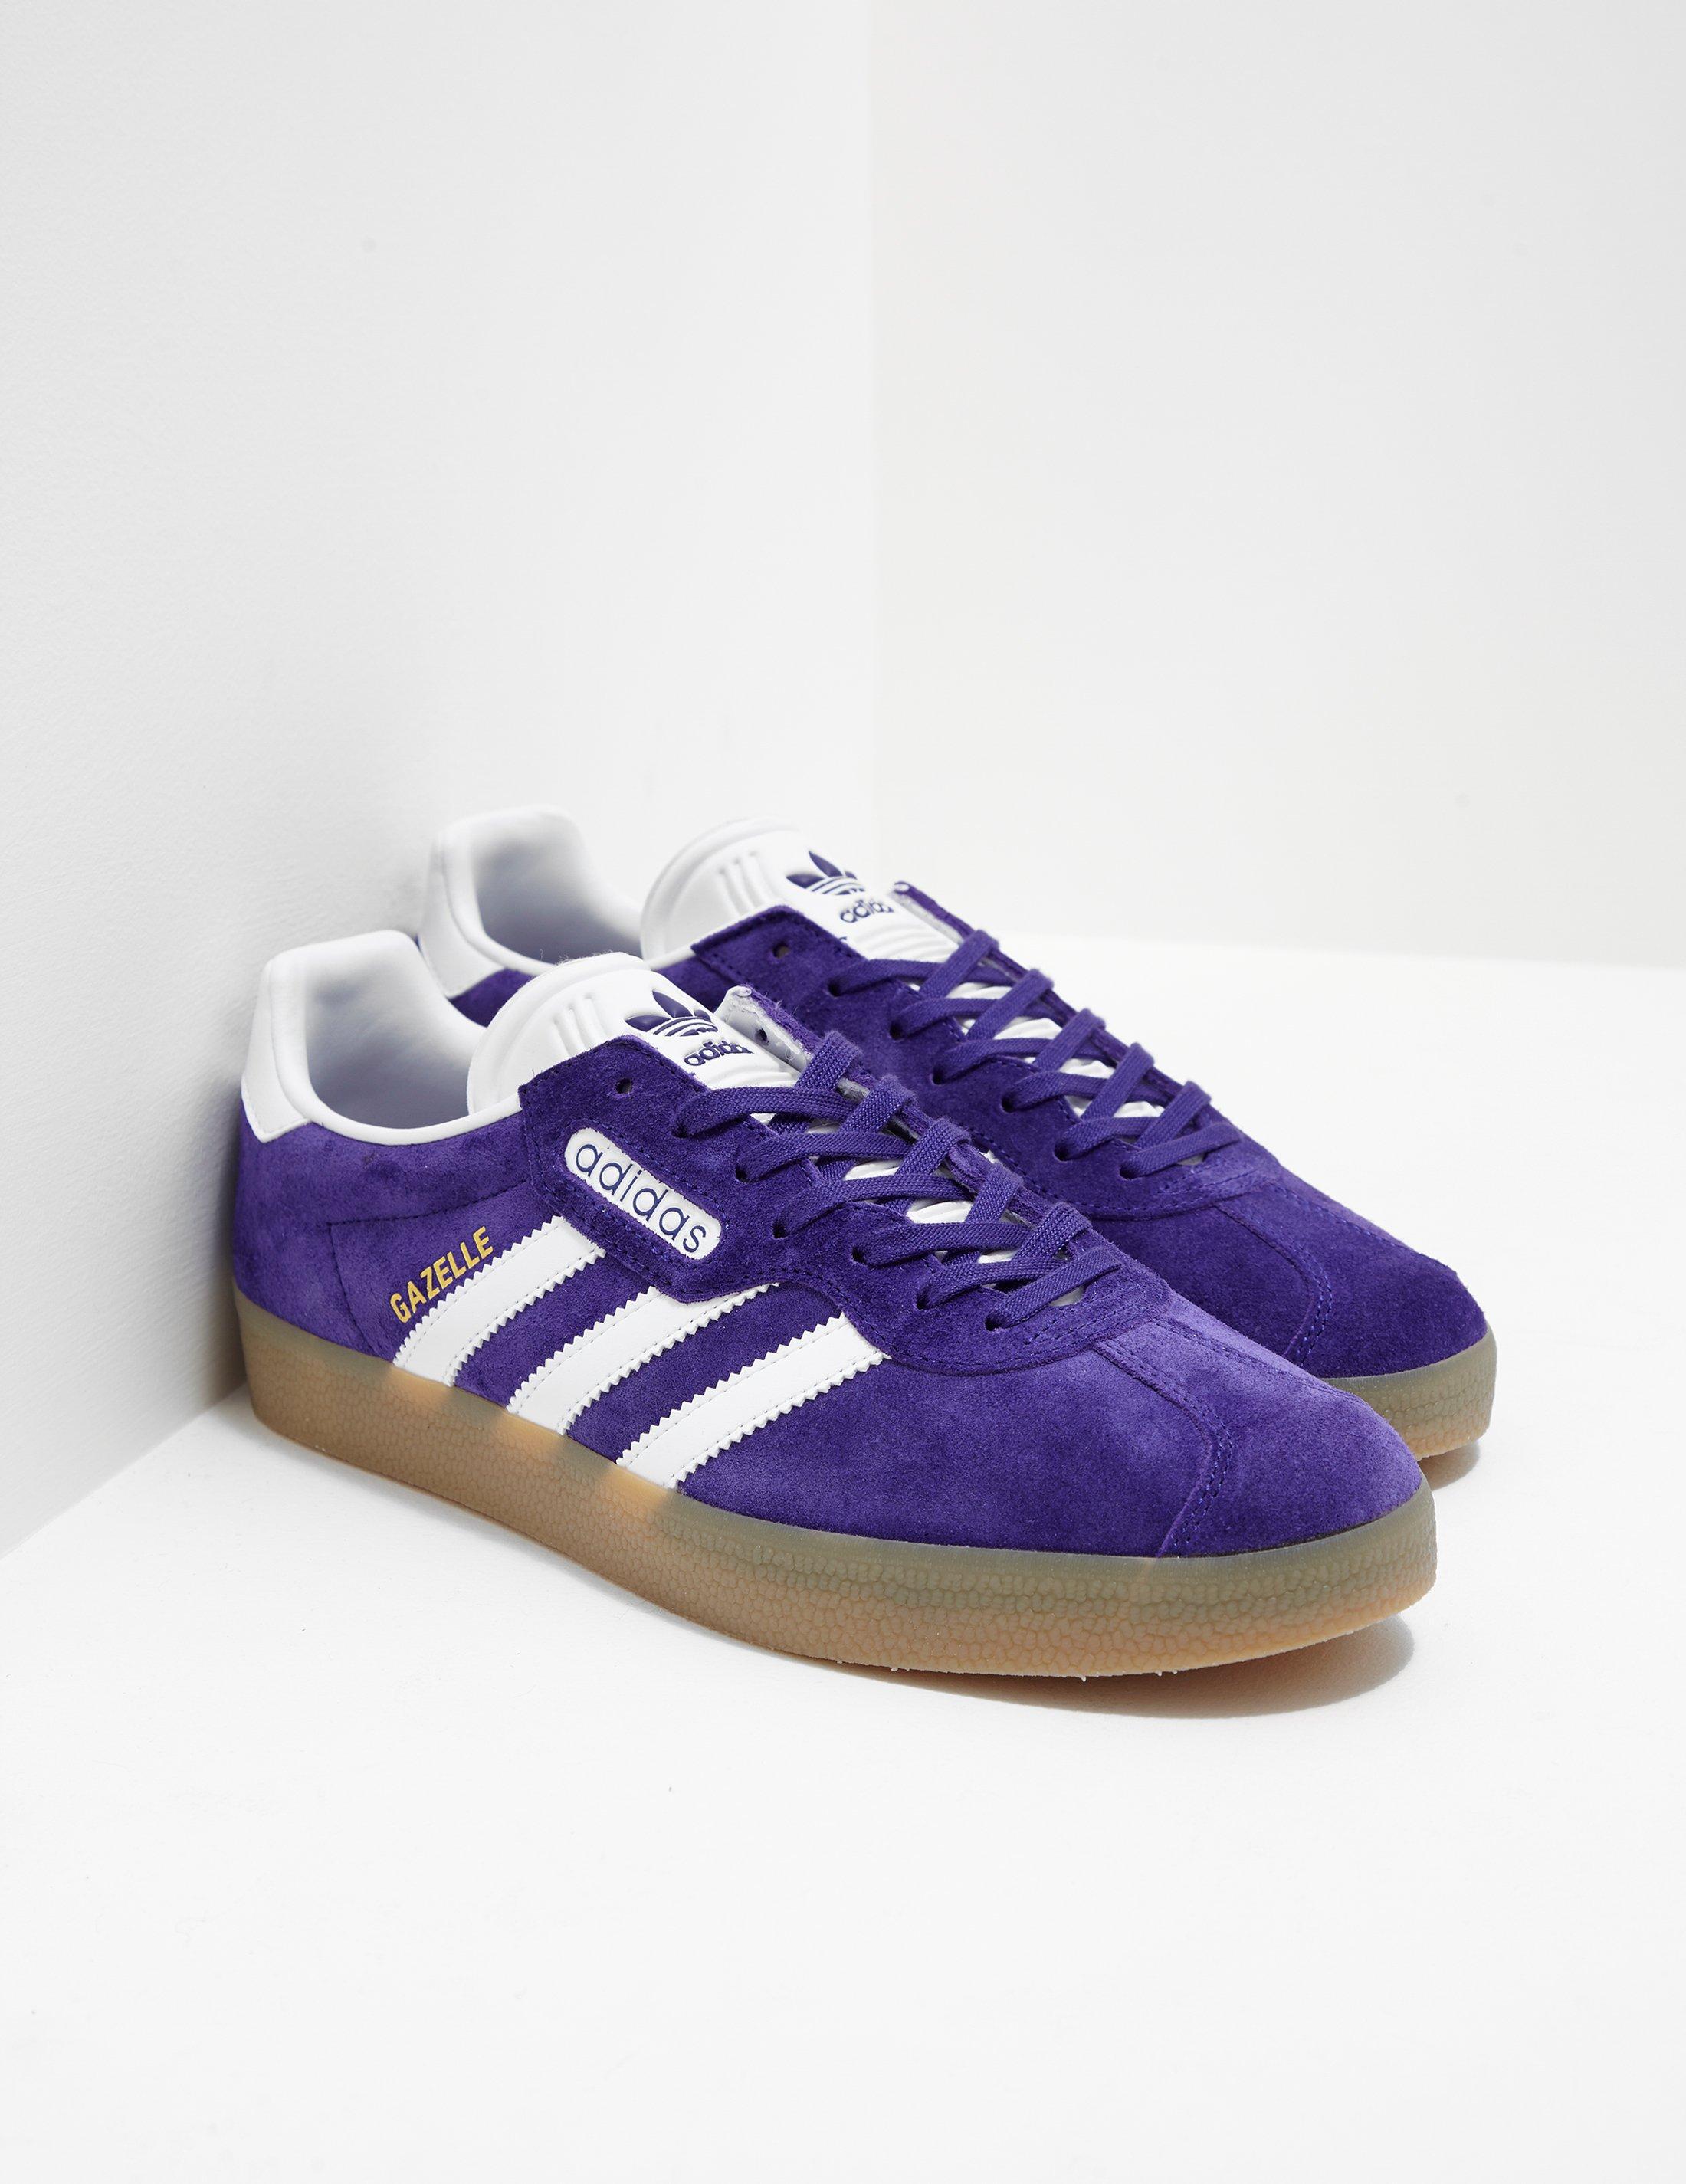 men's purple adidas gazelle trainers